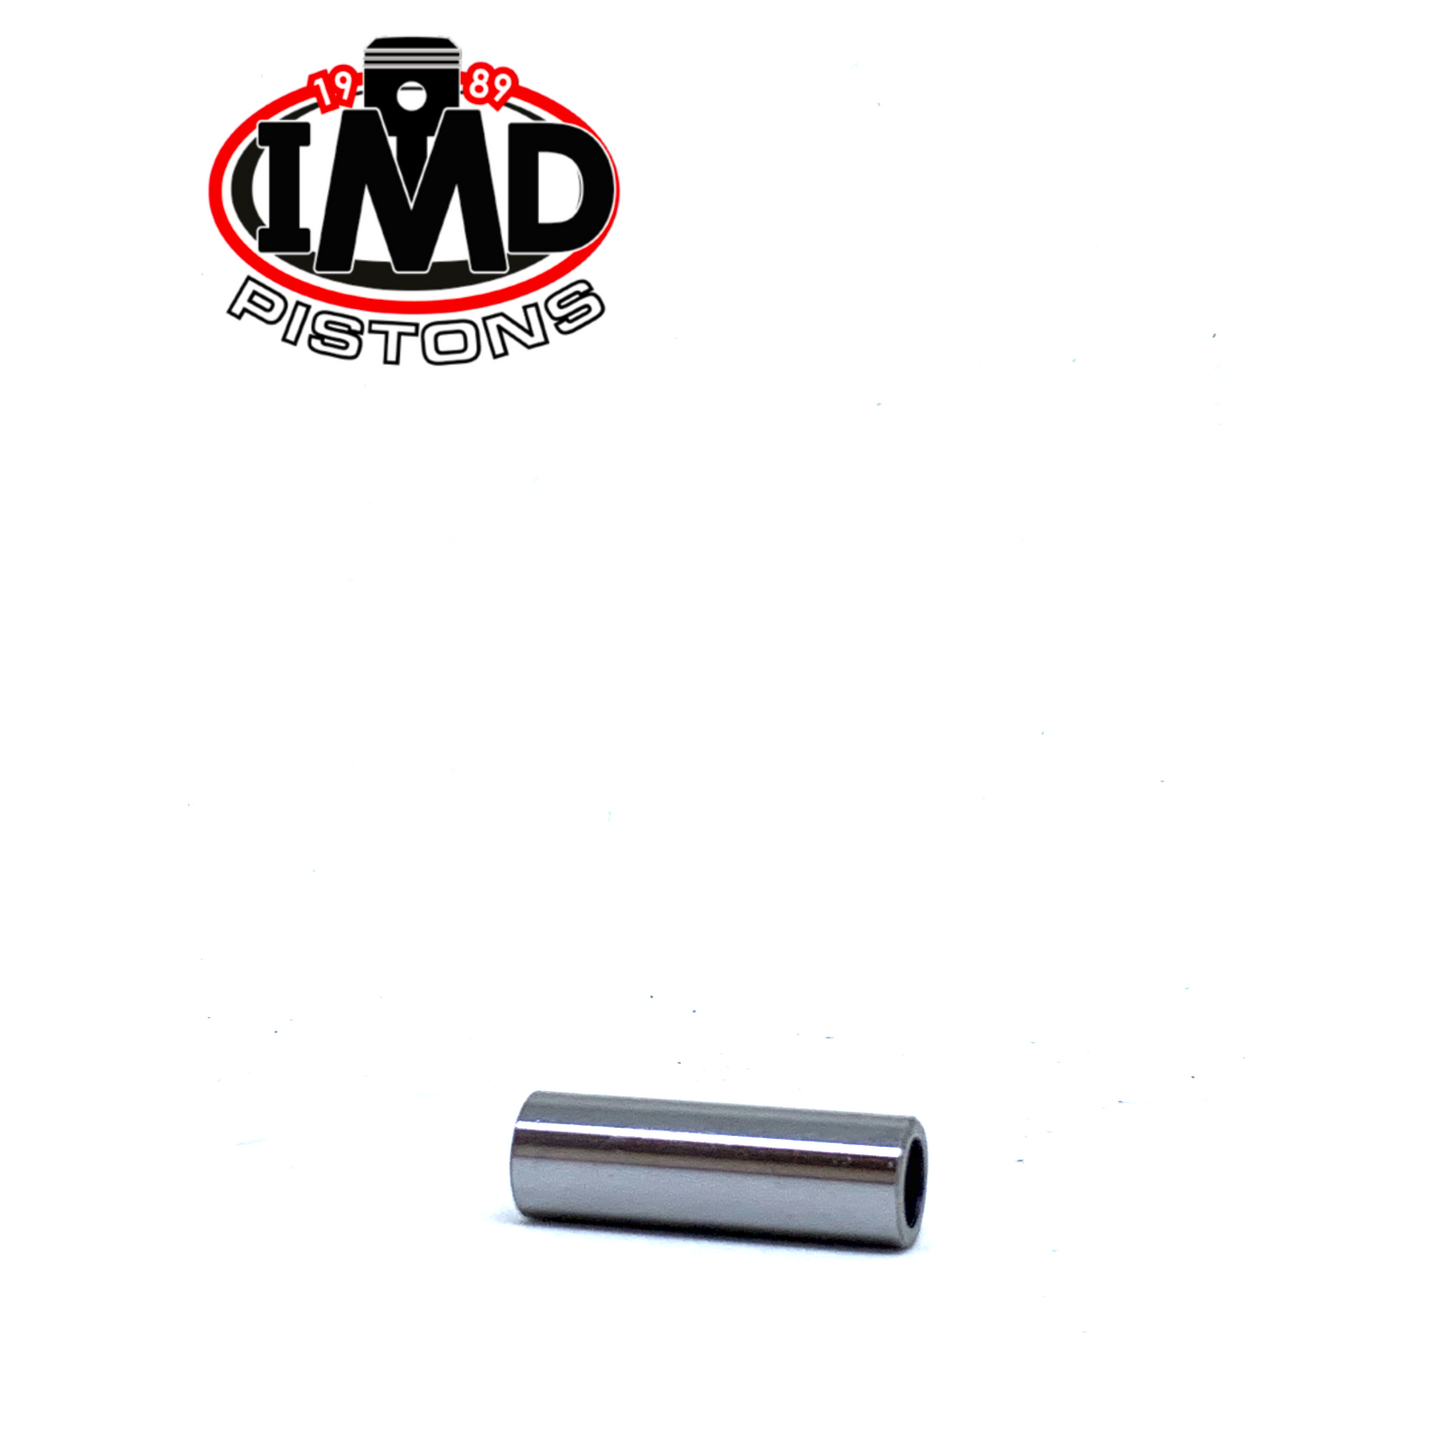 SUZUKI A50 PISTON PIN WRIST PIN (1) IMD Pistons